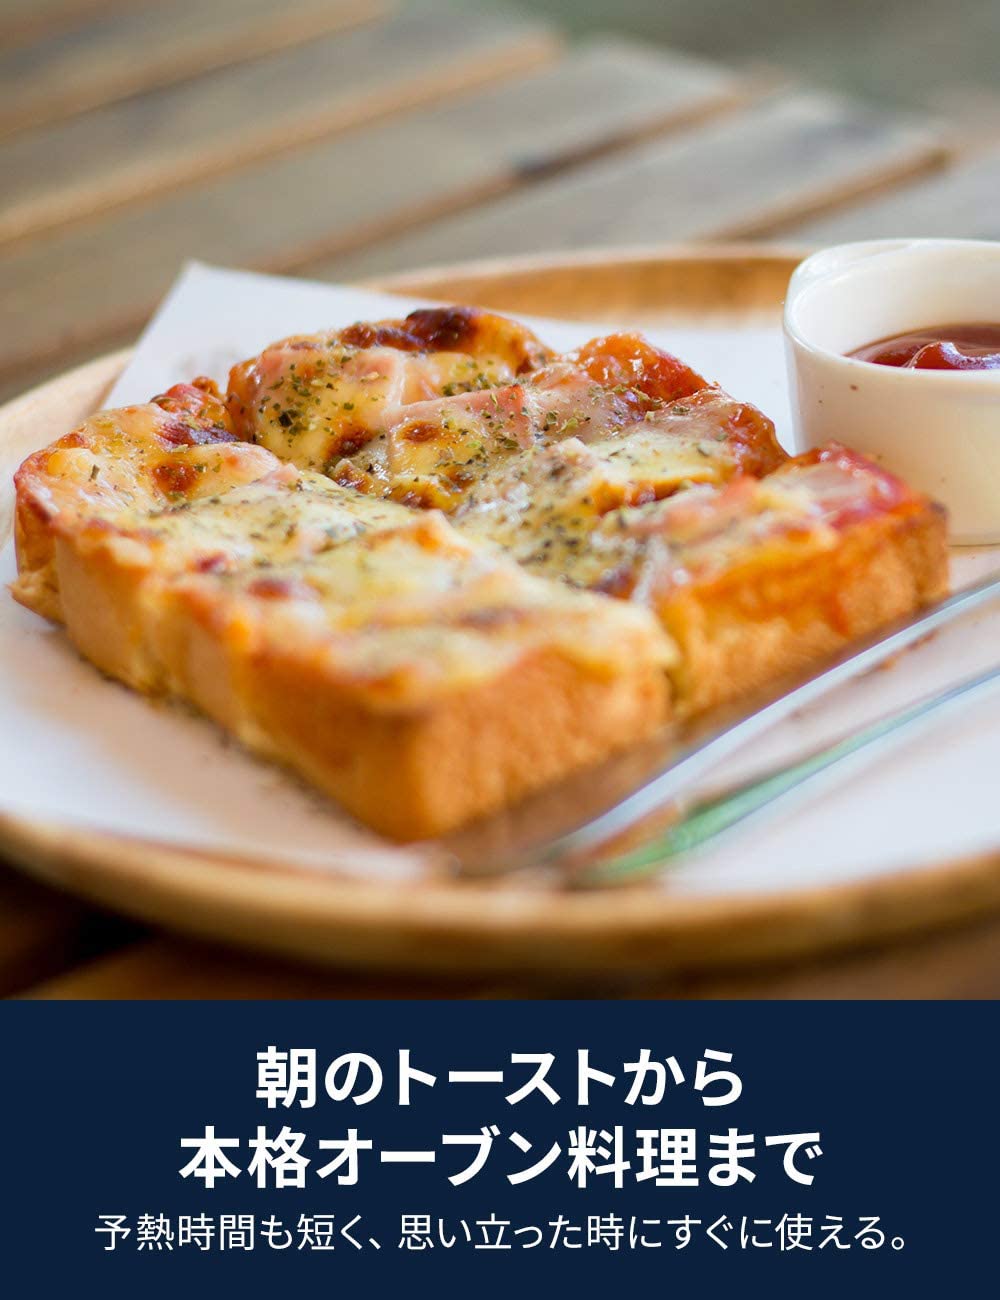 【DeLonghi】オーブン&トースター PK